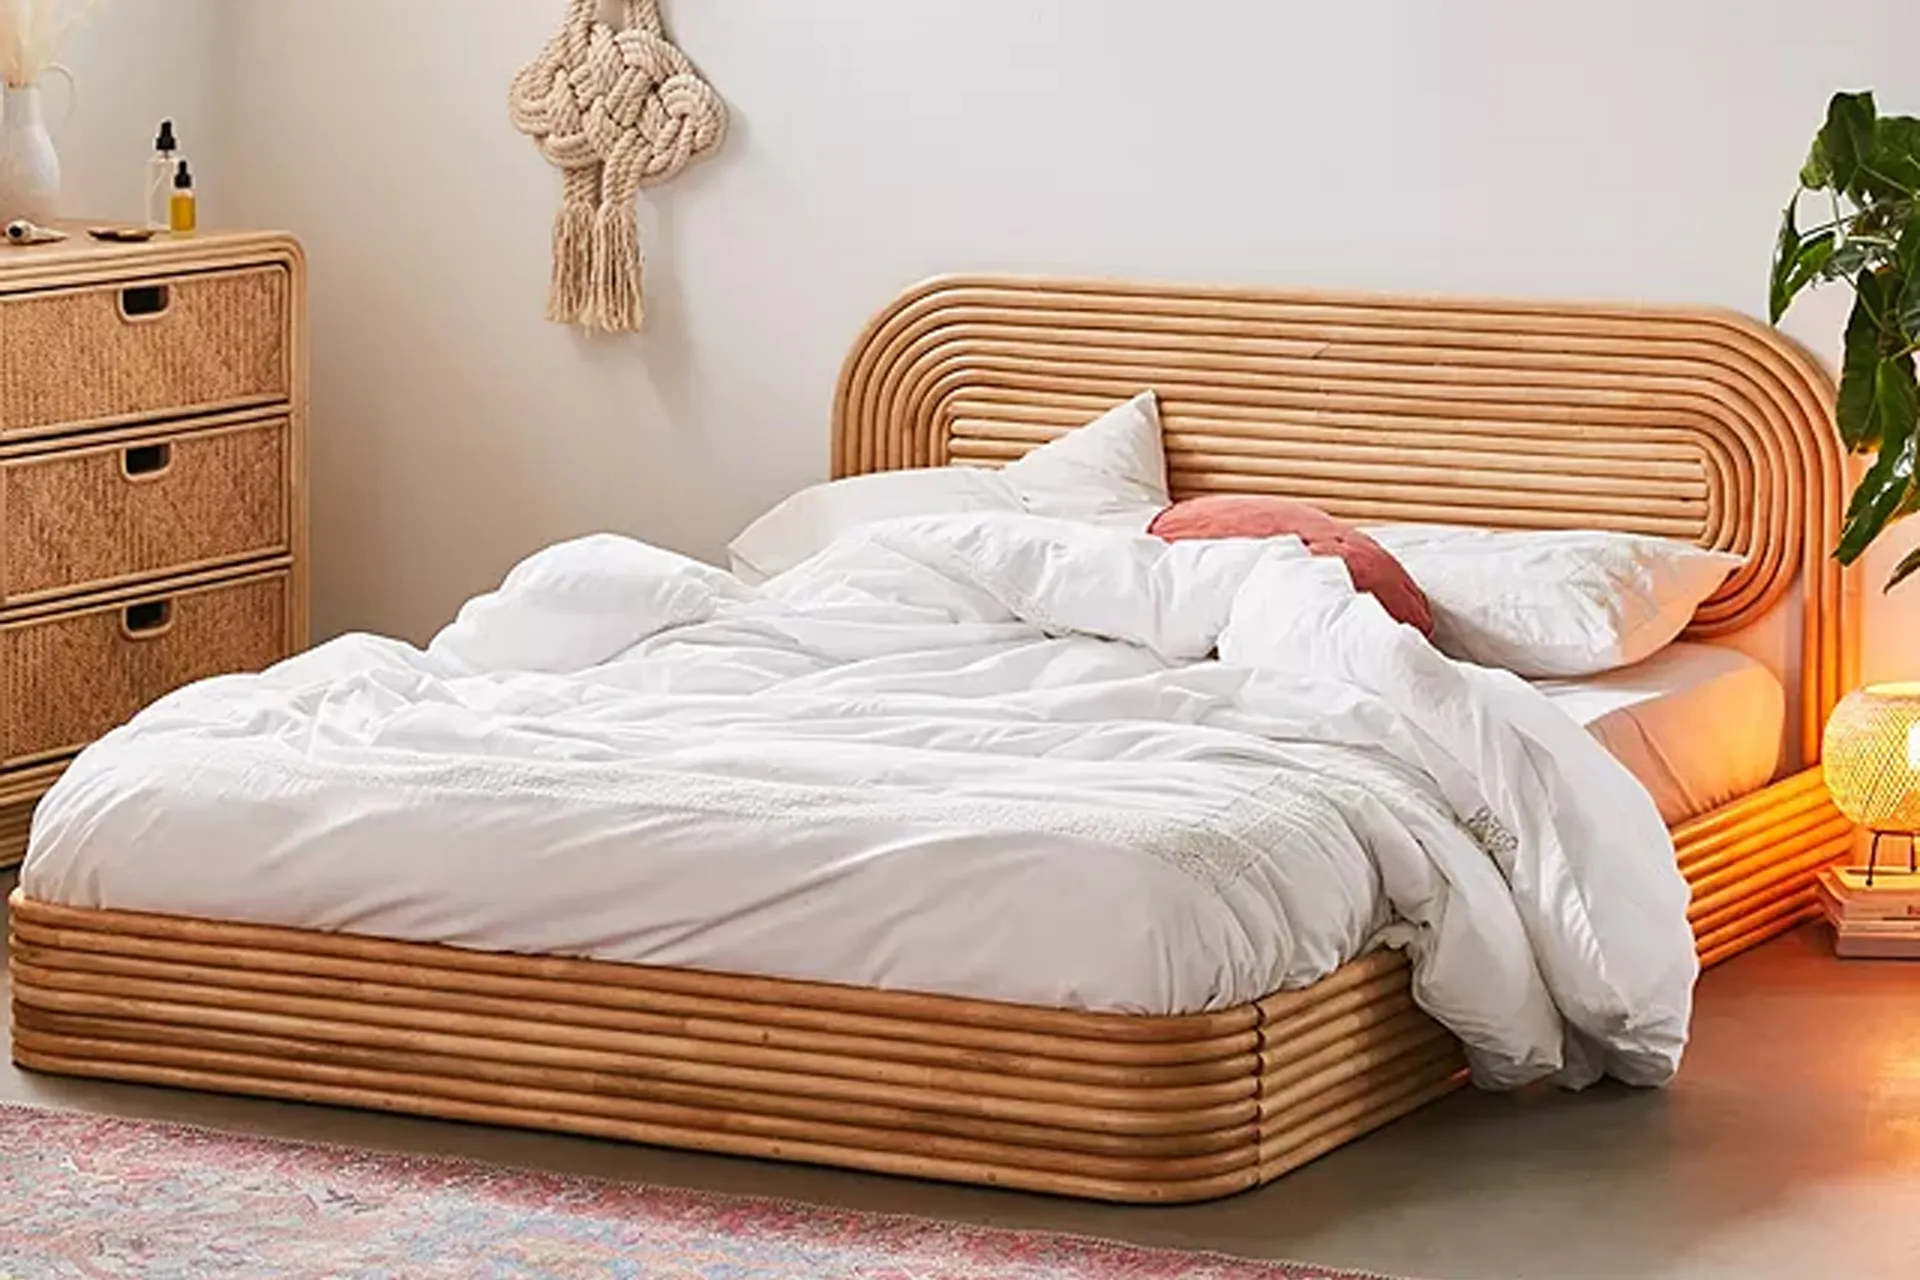 Platform beds with a minimalist frame minimalist sofas